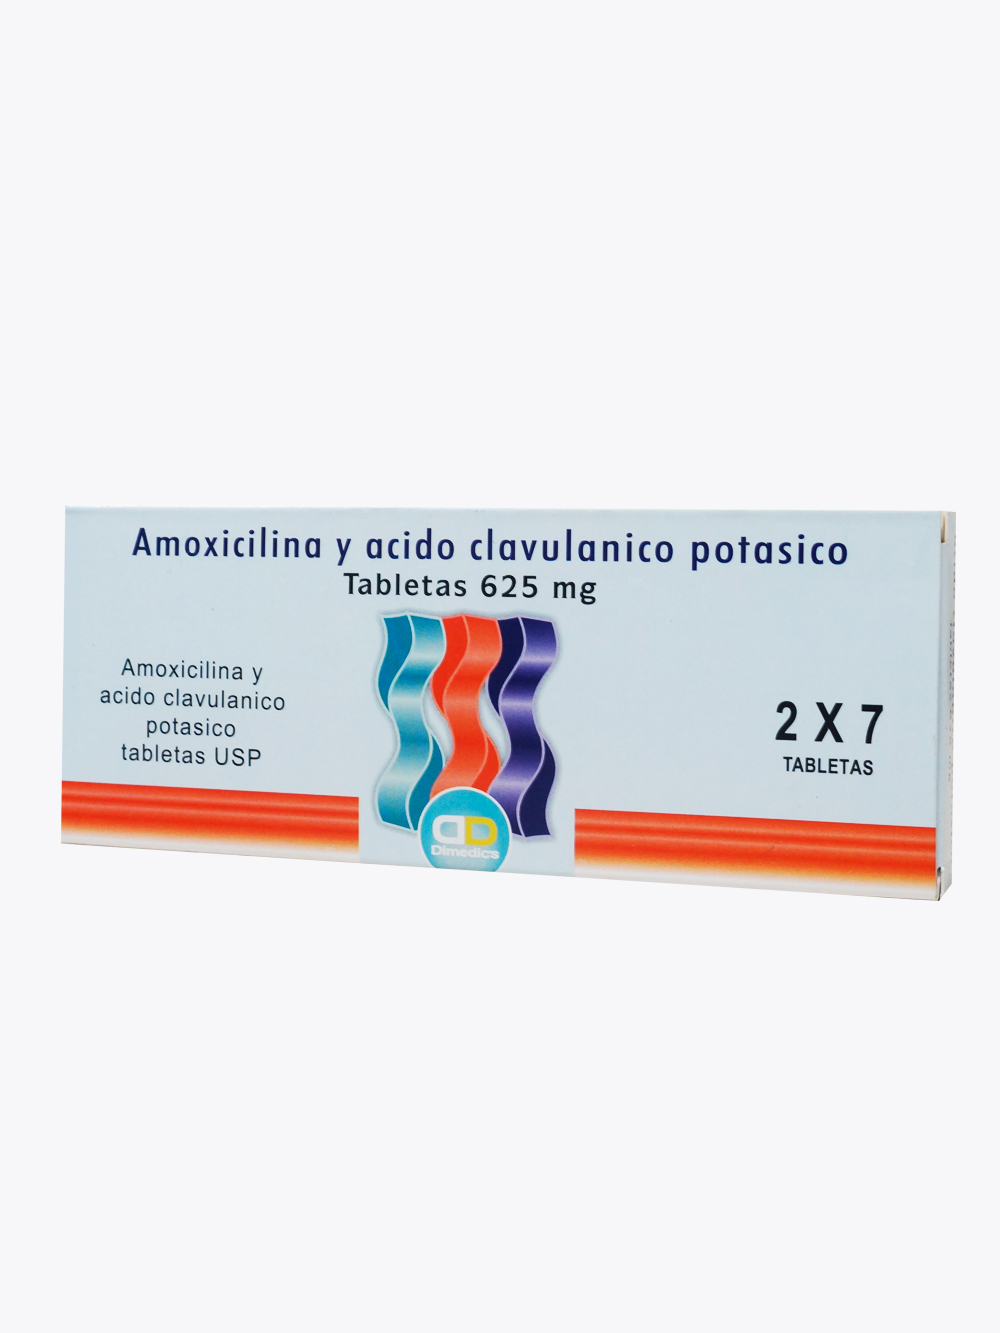 AMOXICILINA Y ACIDO CLAVULANICO